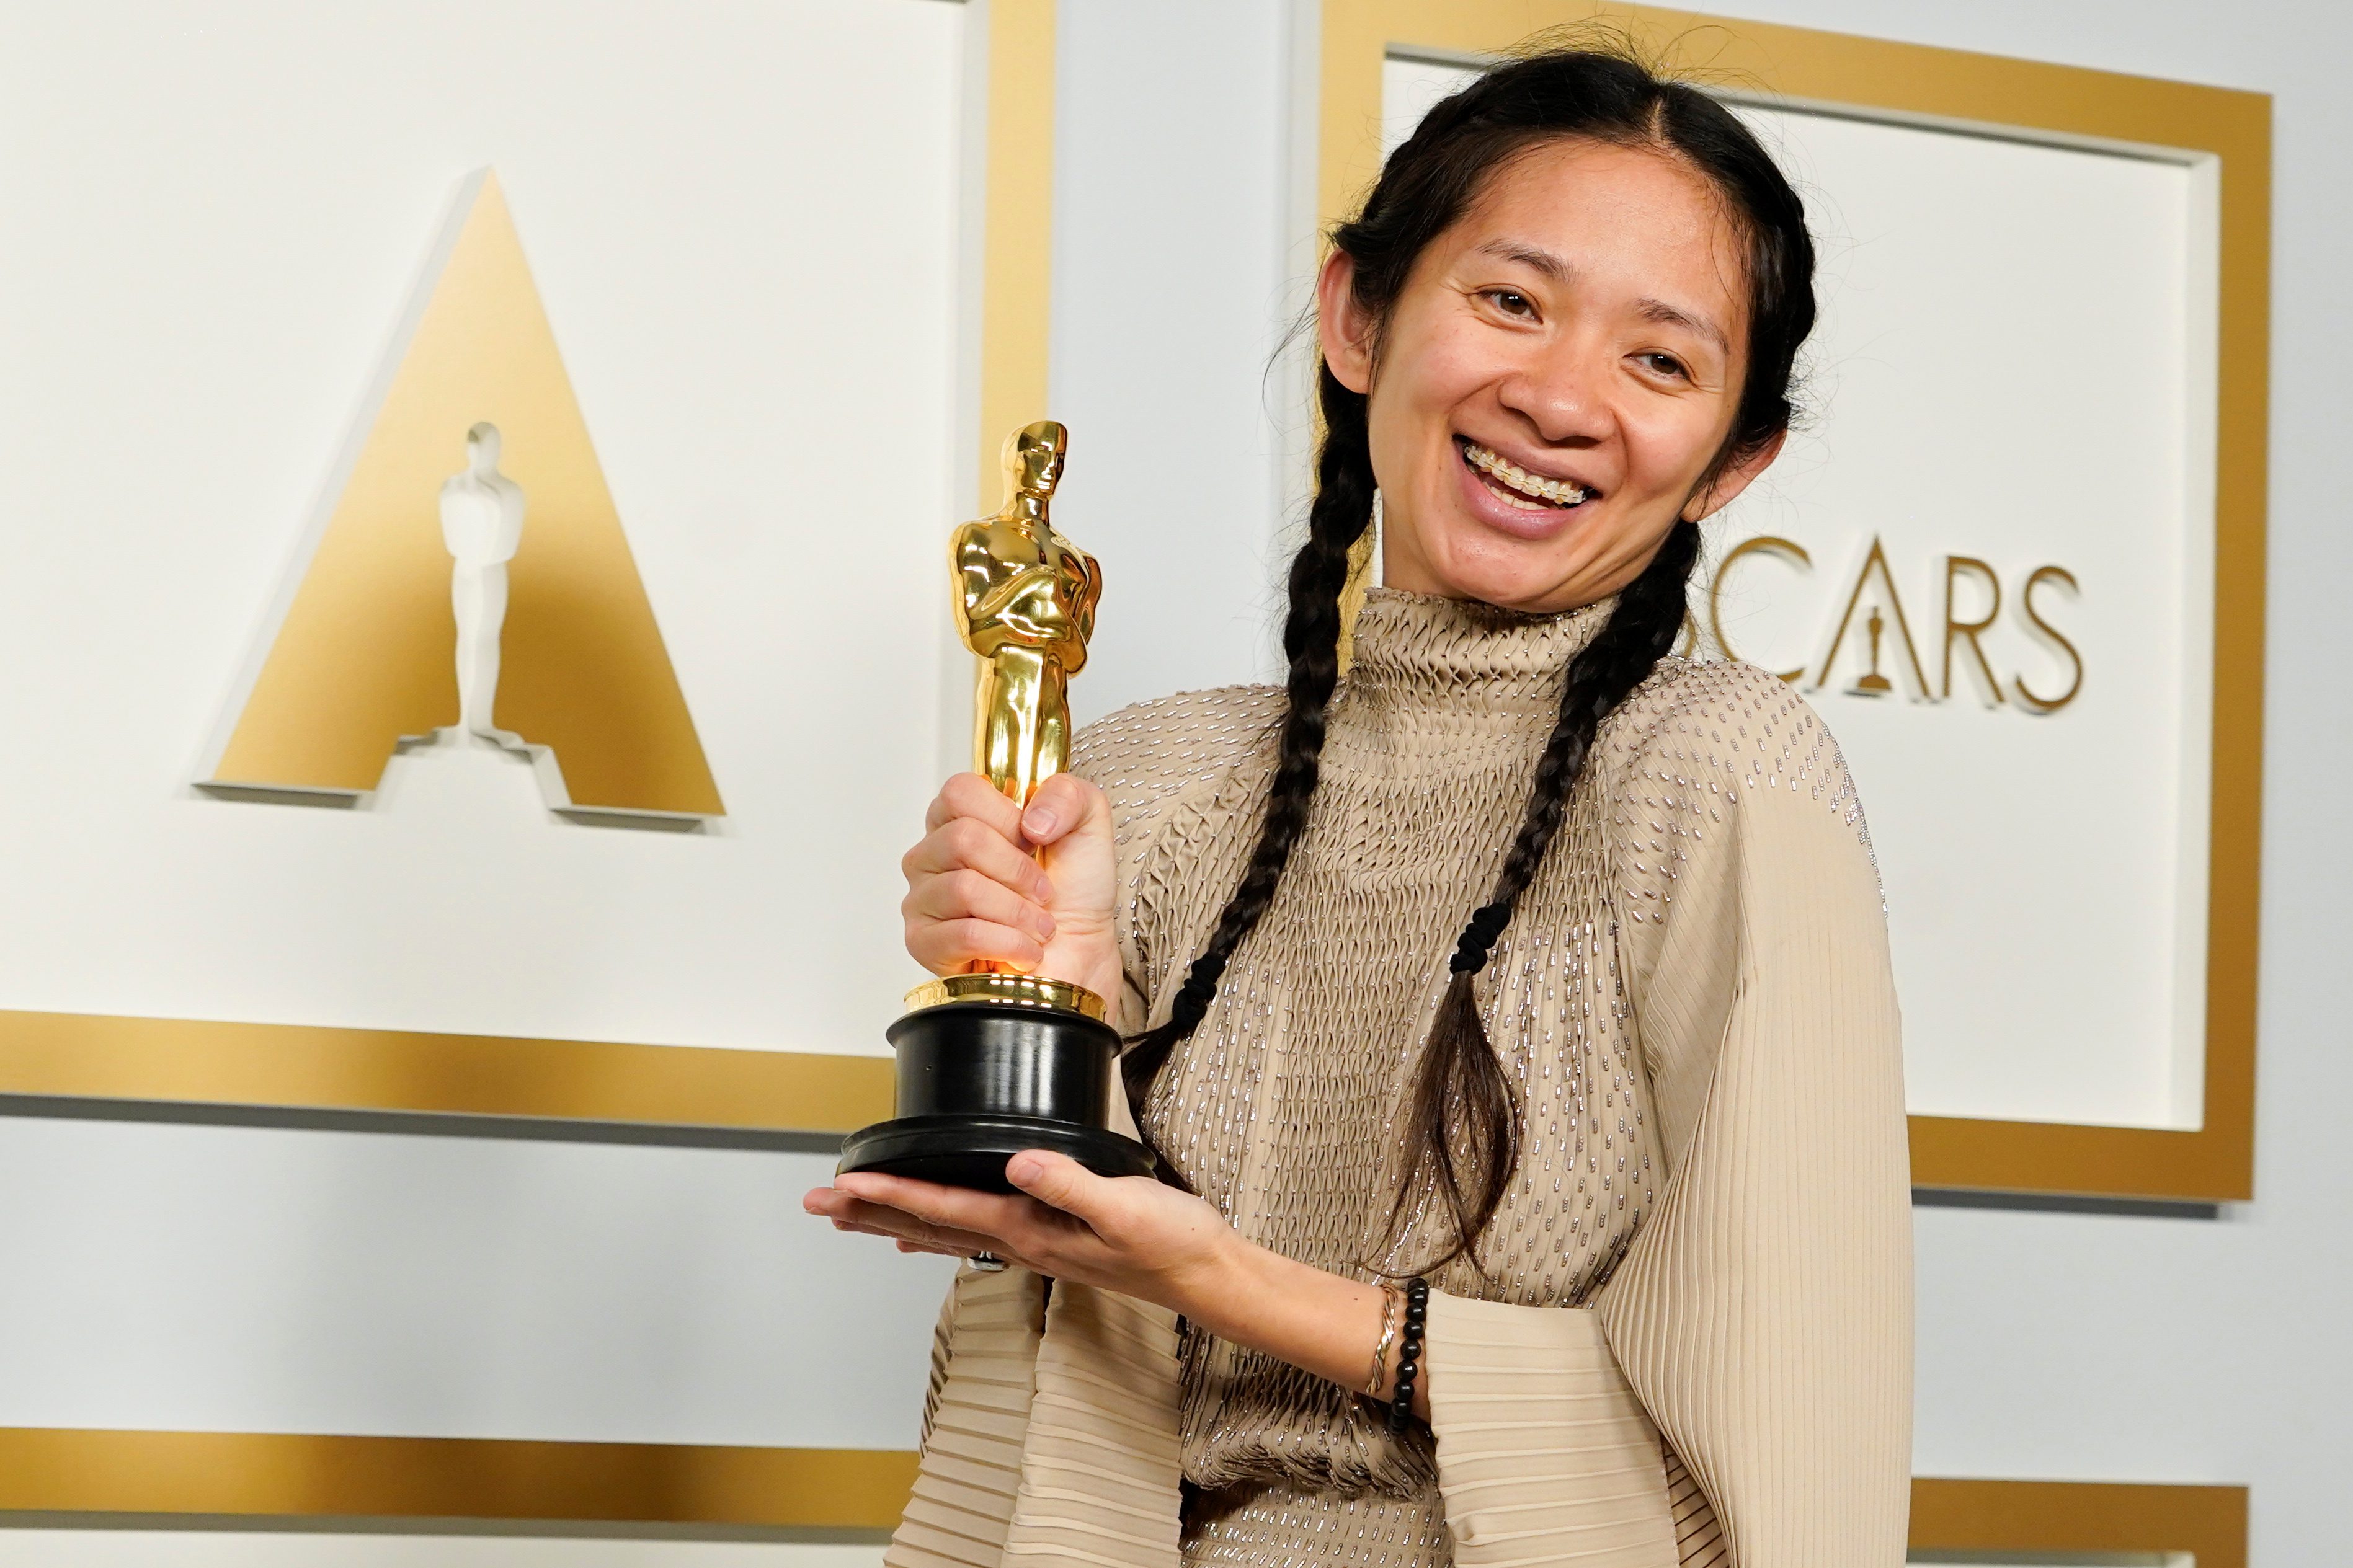 In Oscars 2021 speeches, Best Director Chloe Zhao speaks of goodness